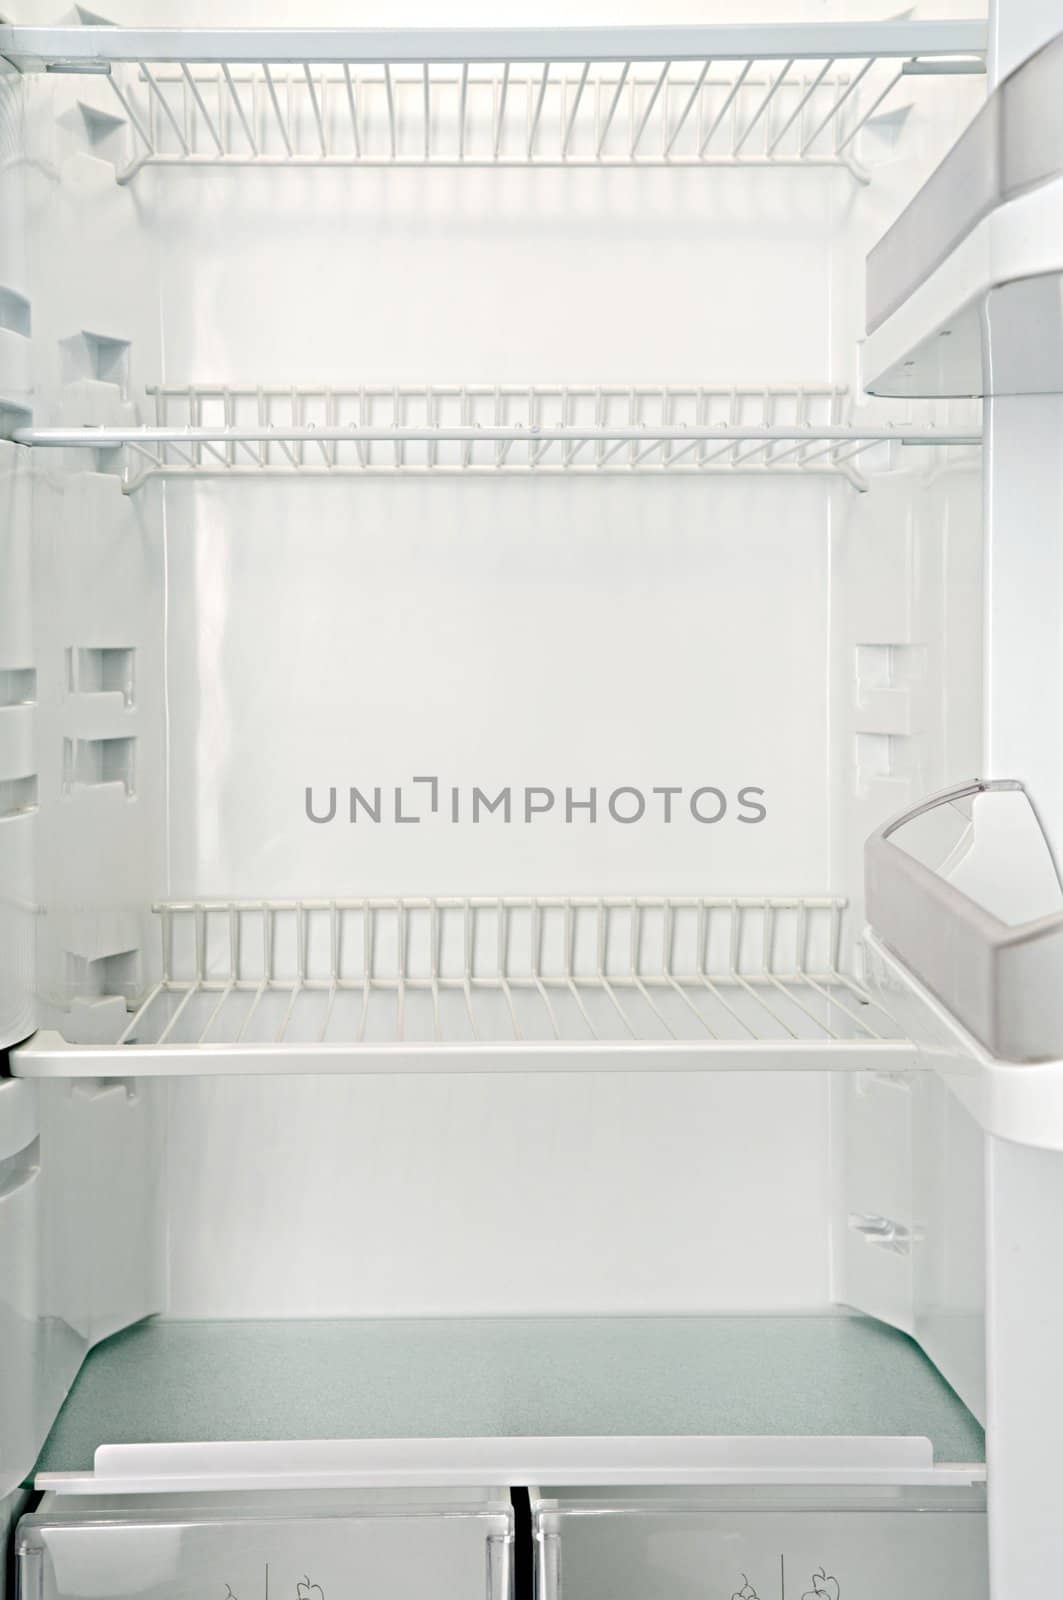 Interior of an empty open white refrigerator
